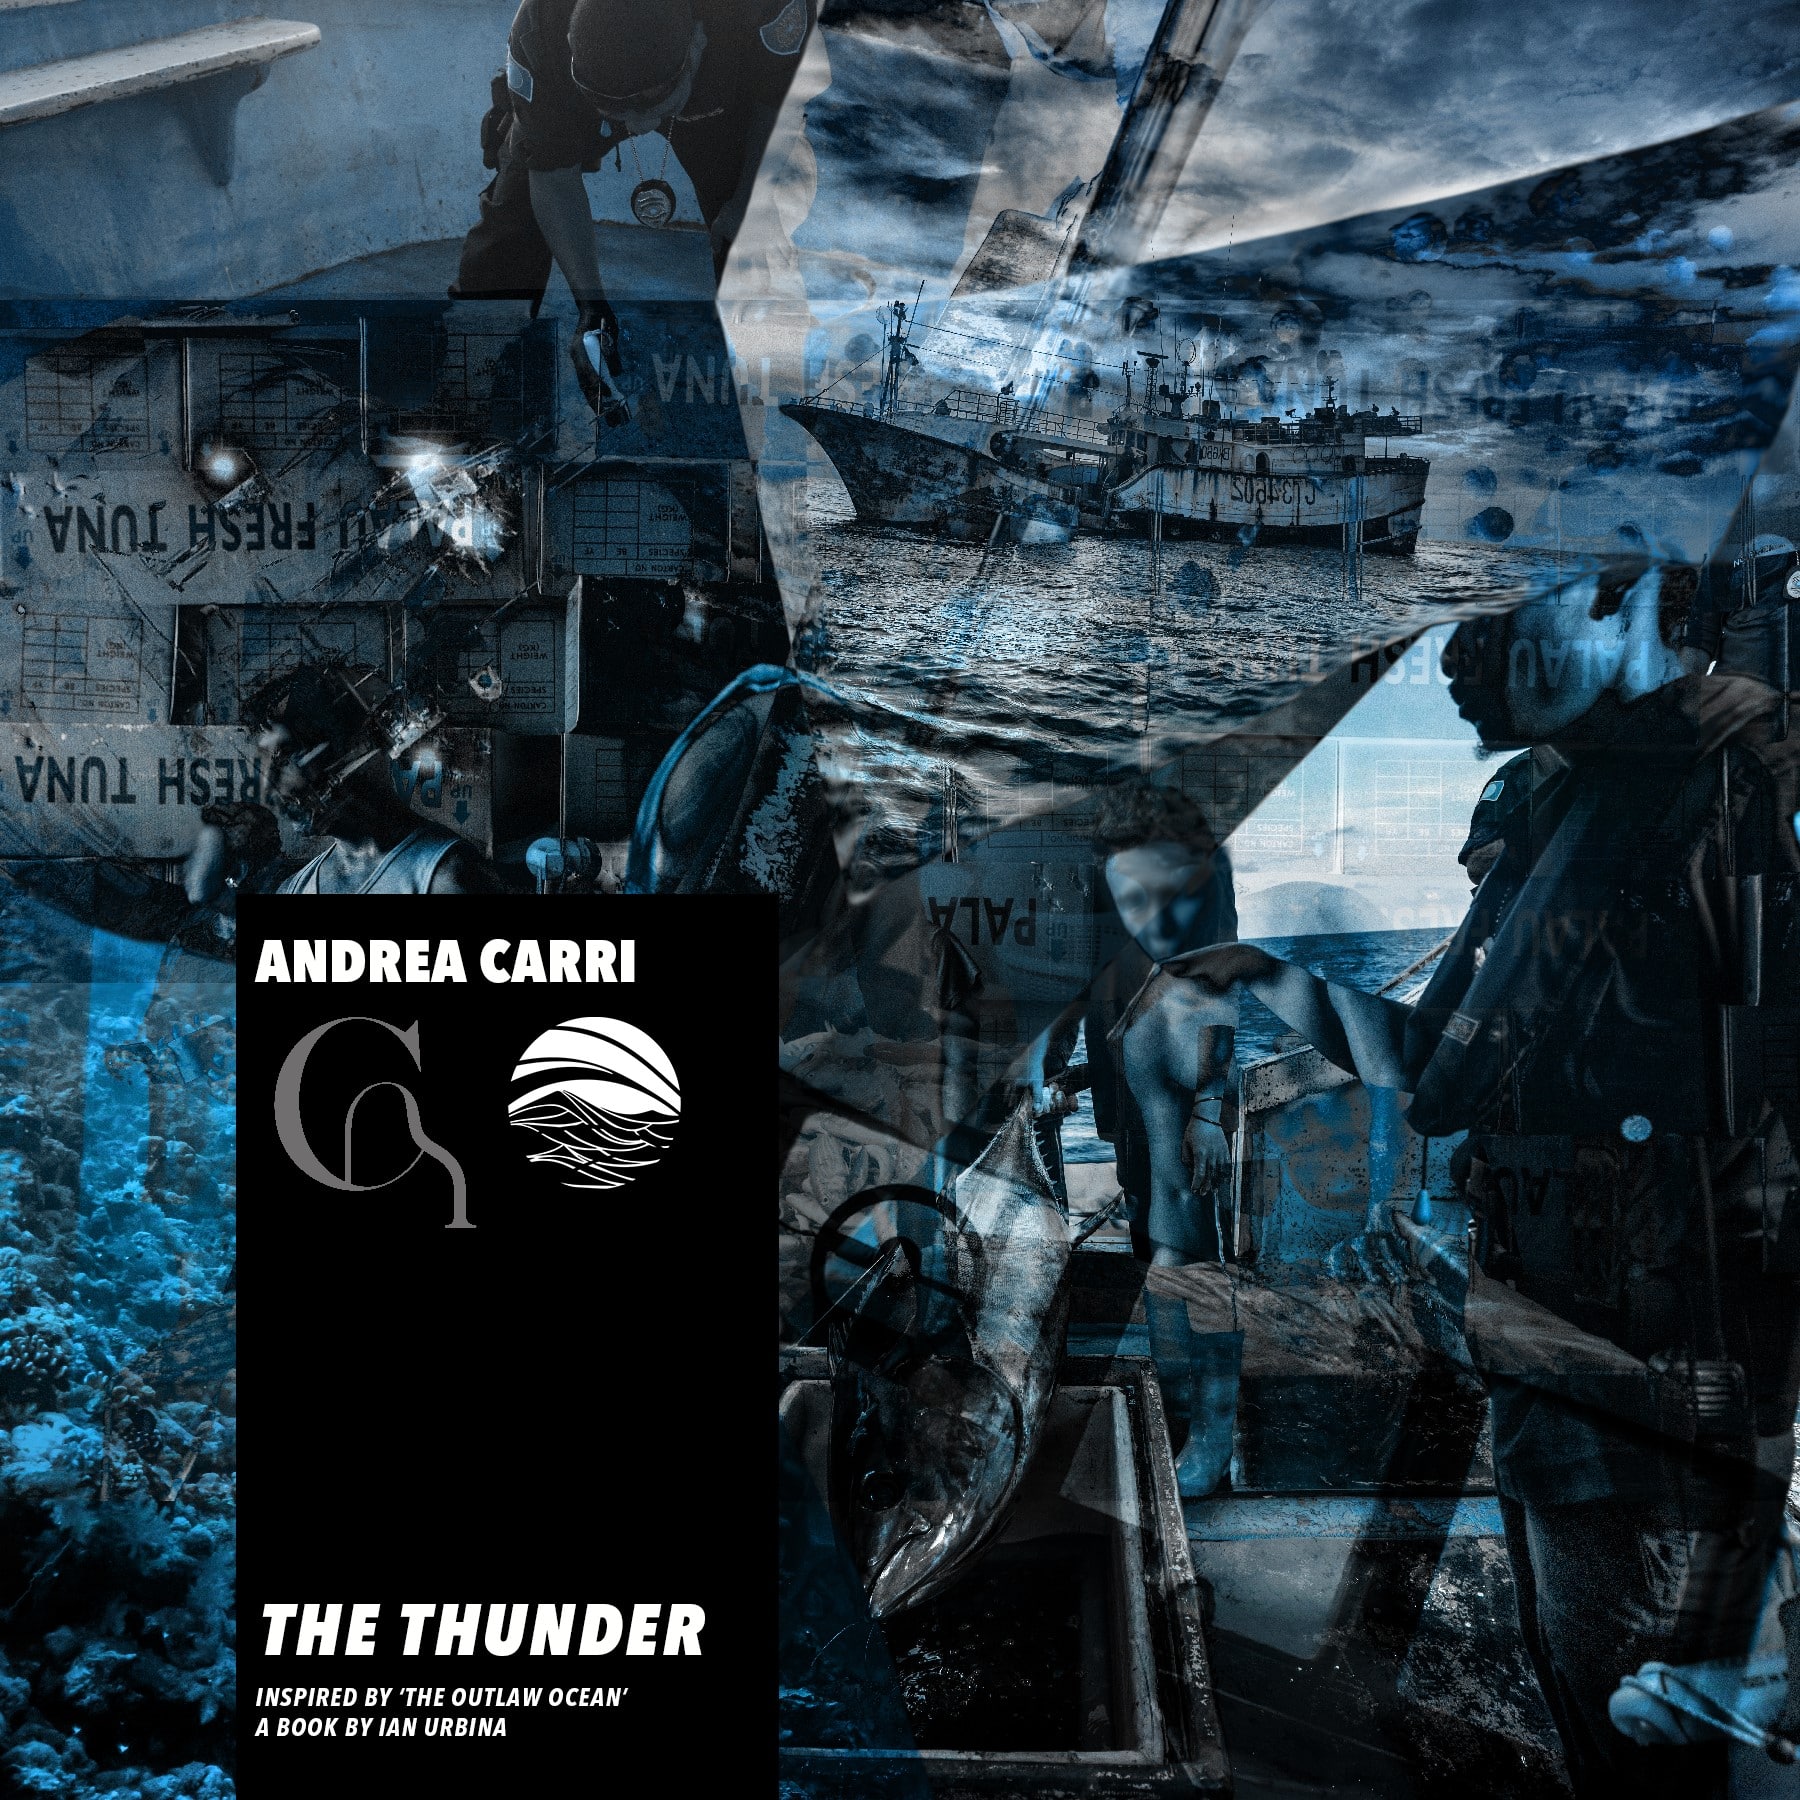 ANDREA-CARRI-THE-THUNDER-ALBUM-ART-1-4-M